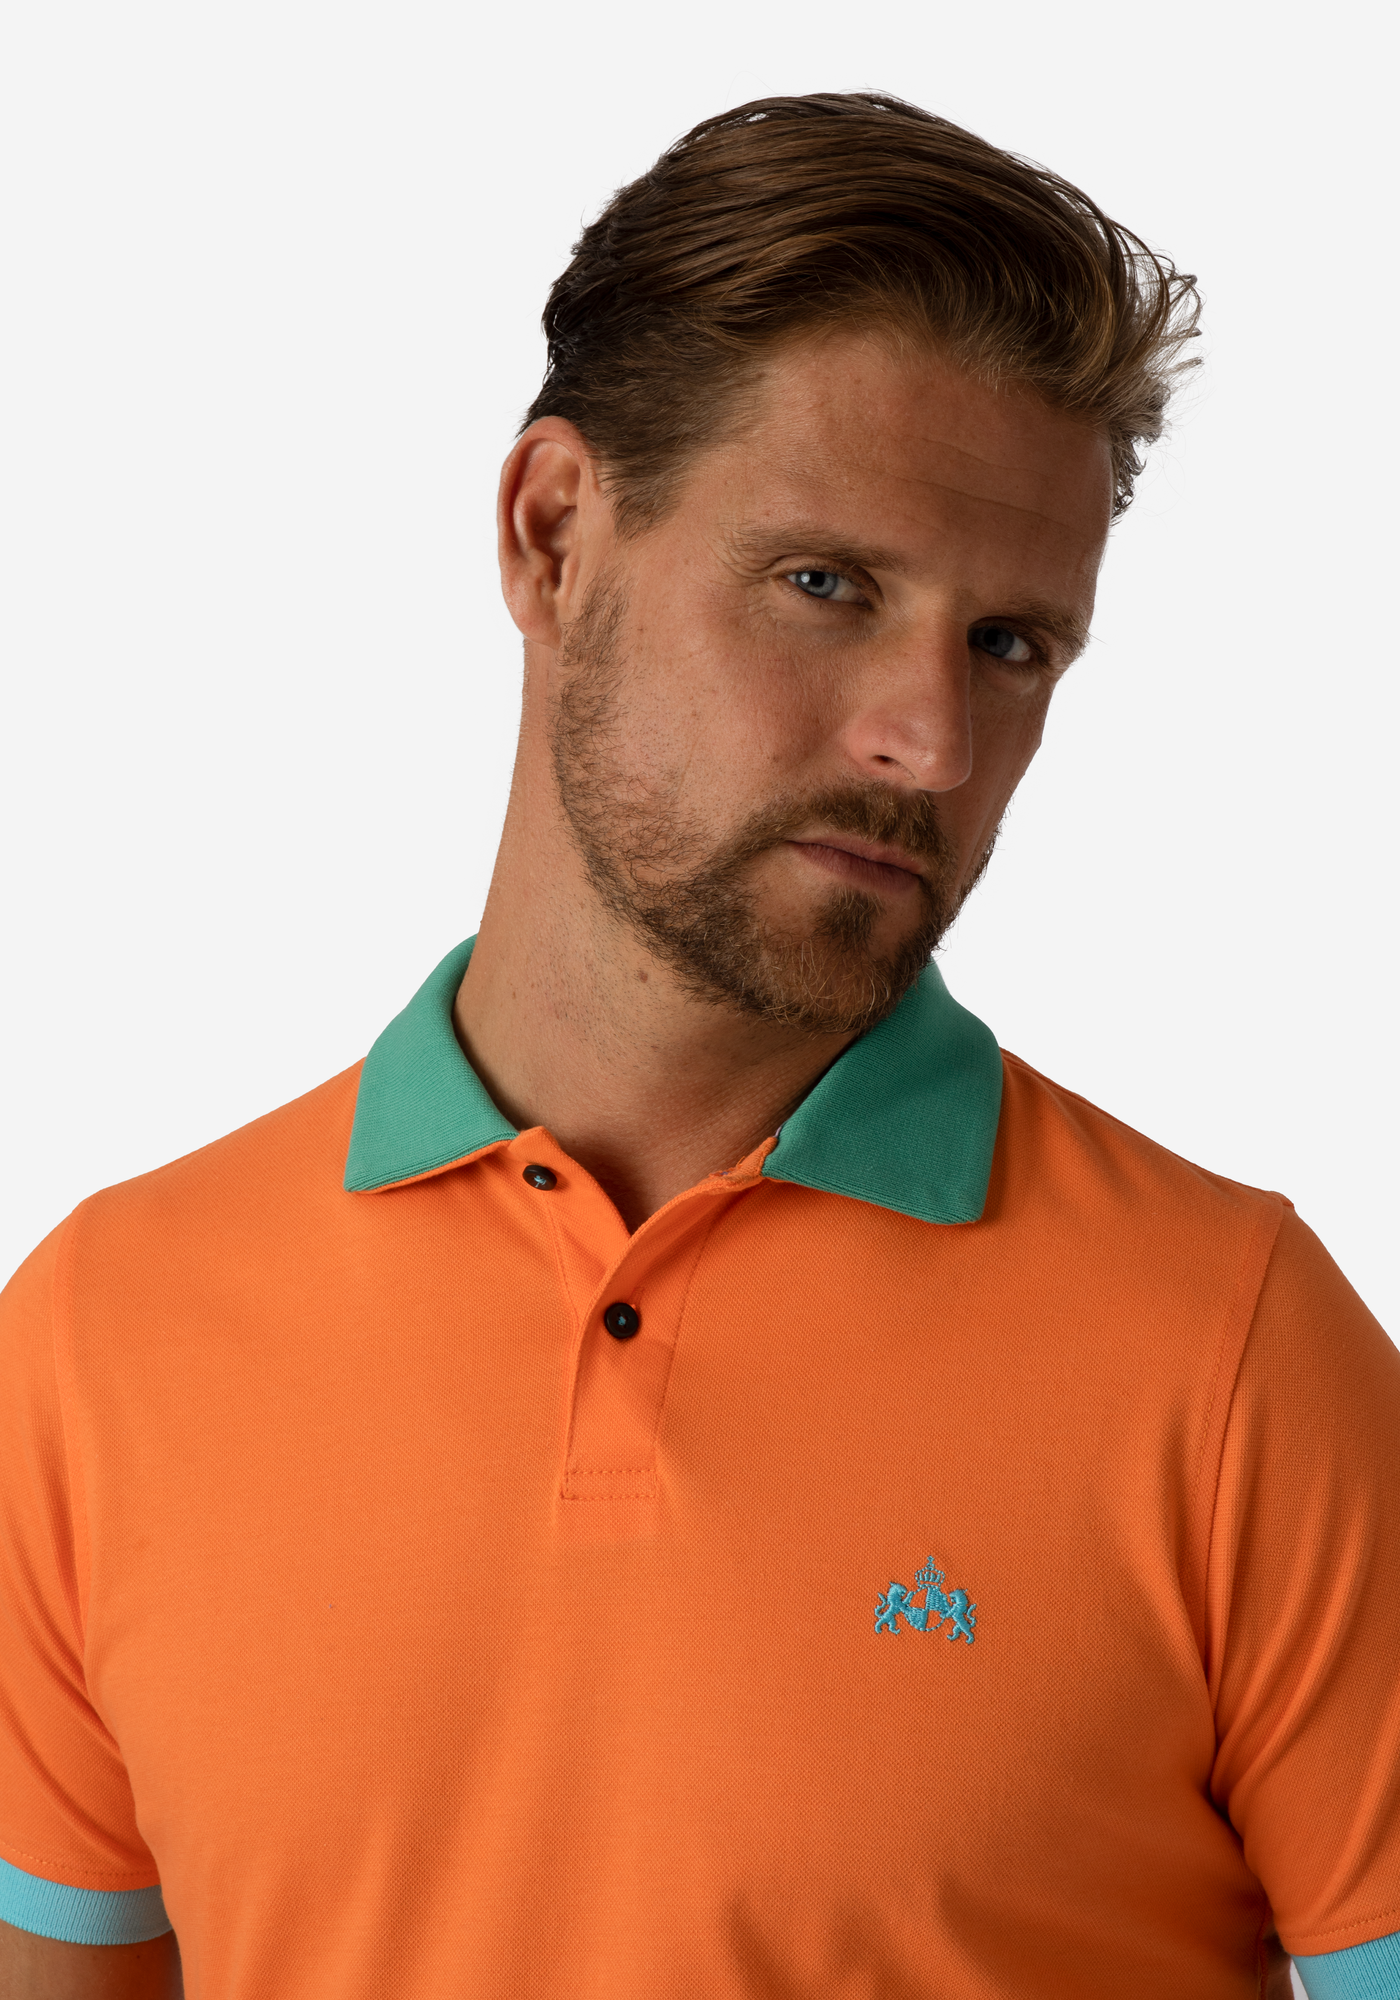 Blaze Orange Cotton Lycra Polo Shirt